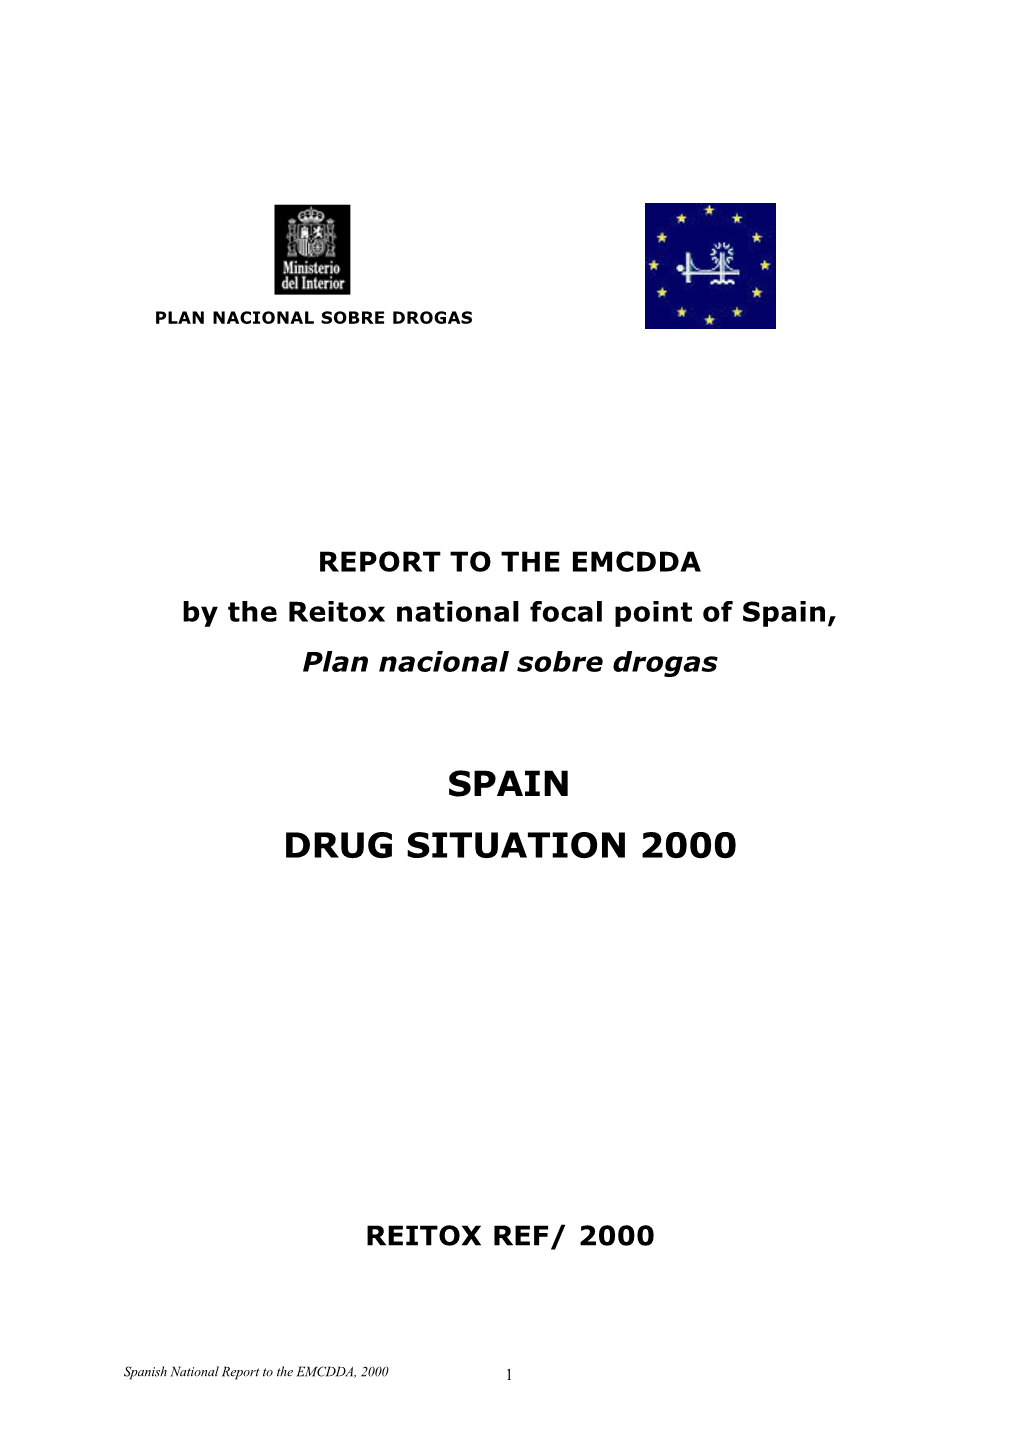 Spain Drug Situation 2000